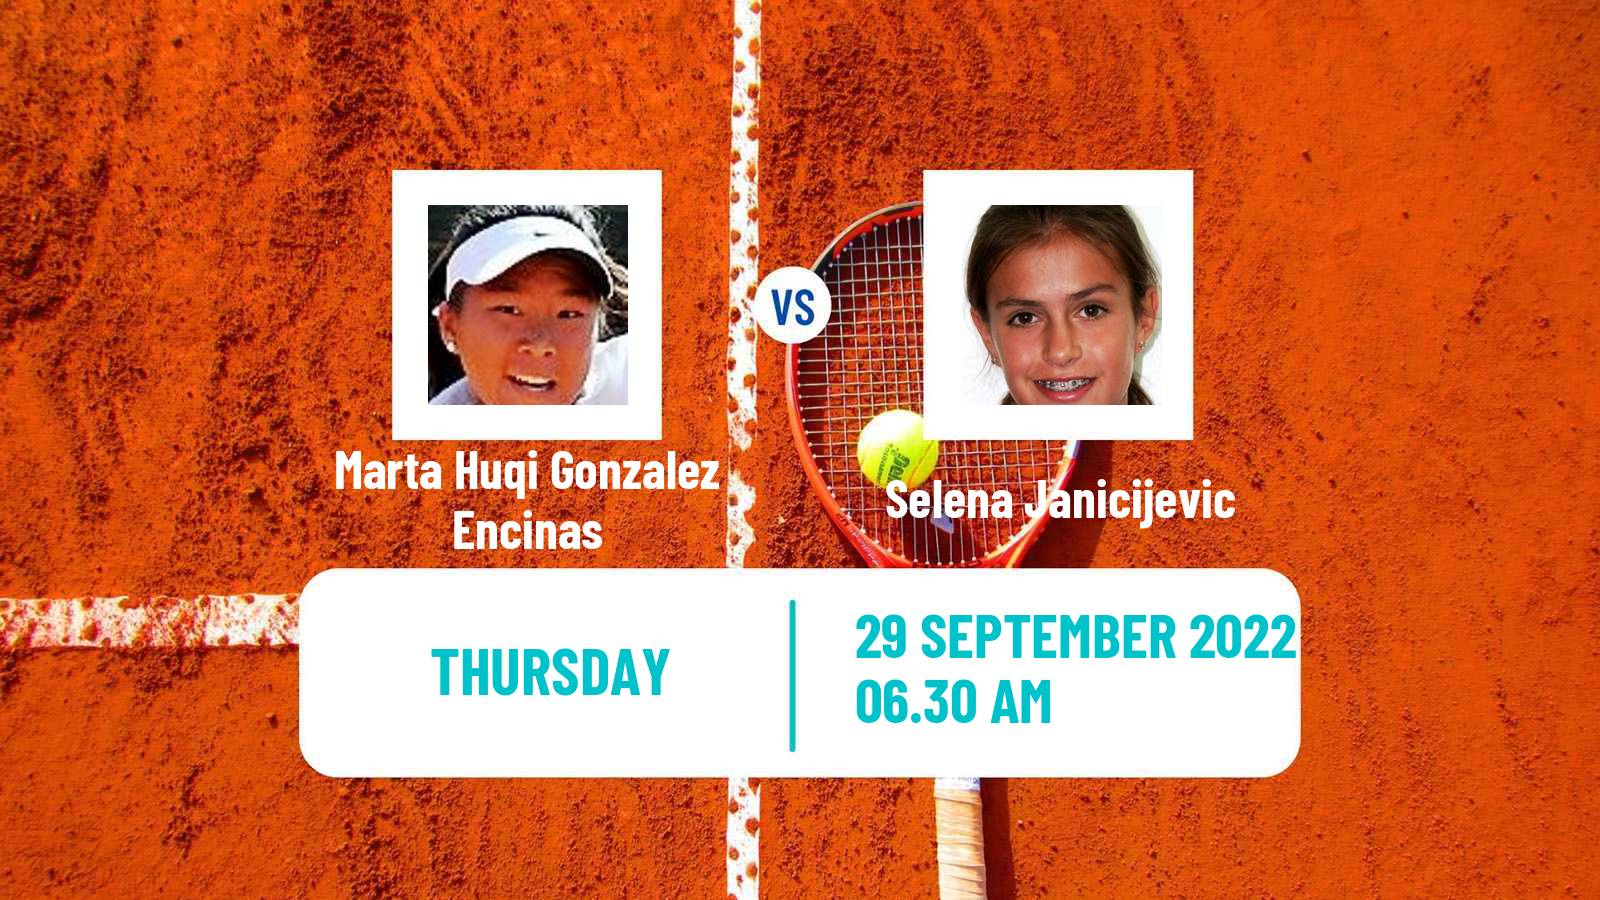 Tennis ITF Tournaments Marta Huqi Gonzalez Encinas - Selena Janicijevic